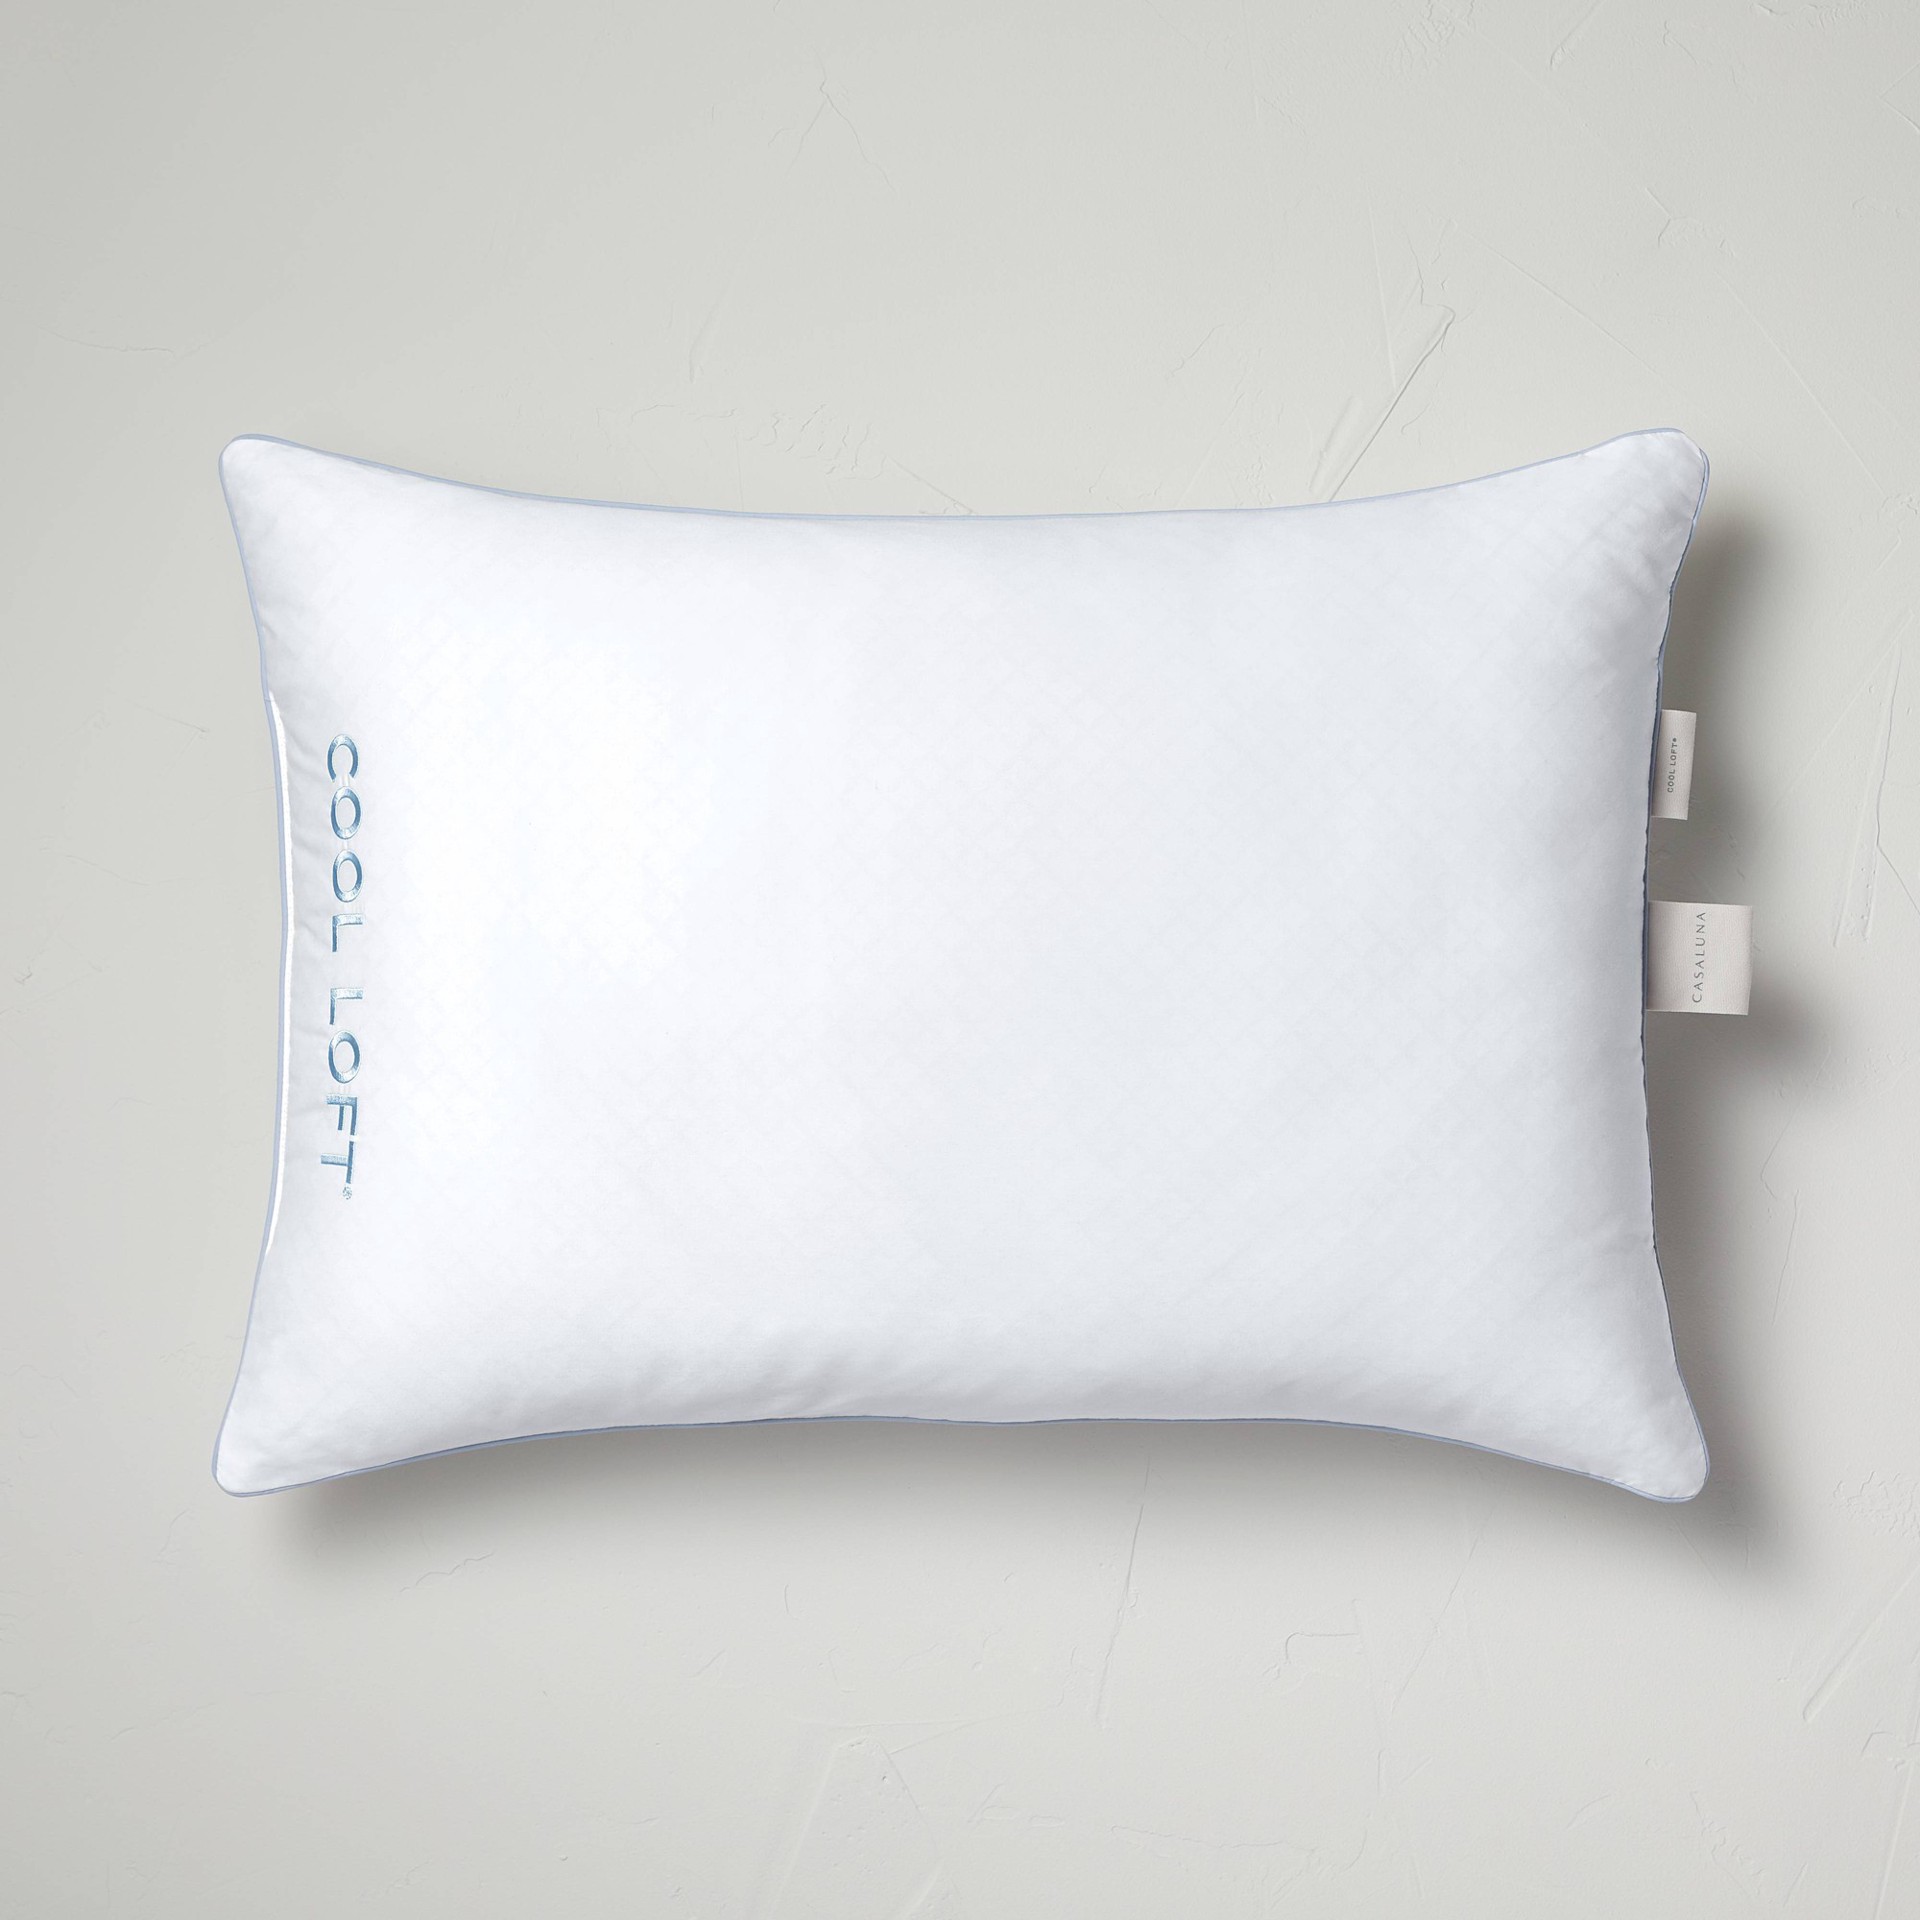  Okasion Black and Silver Decorative Throw Pillows